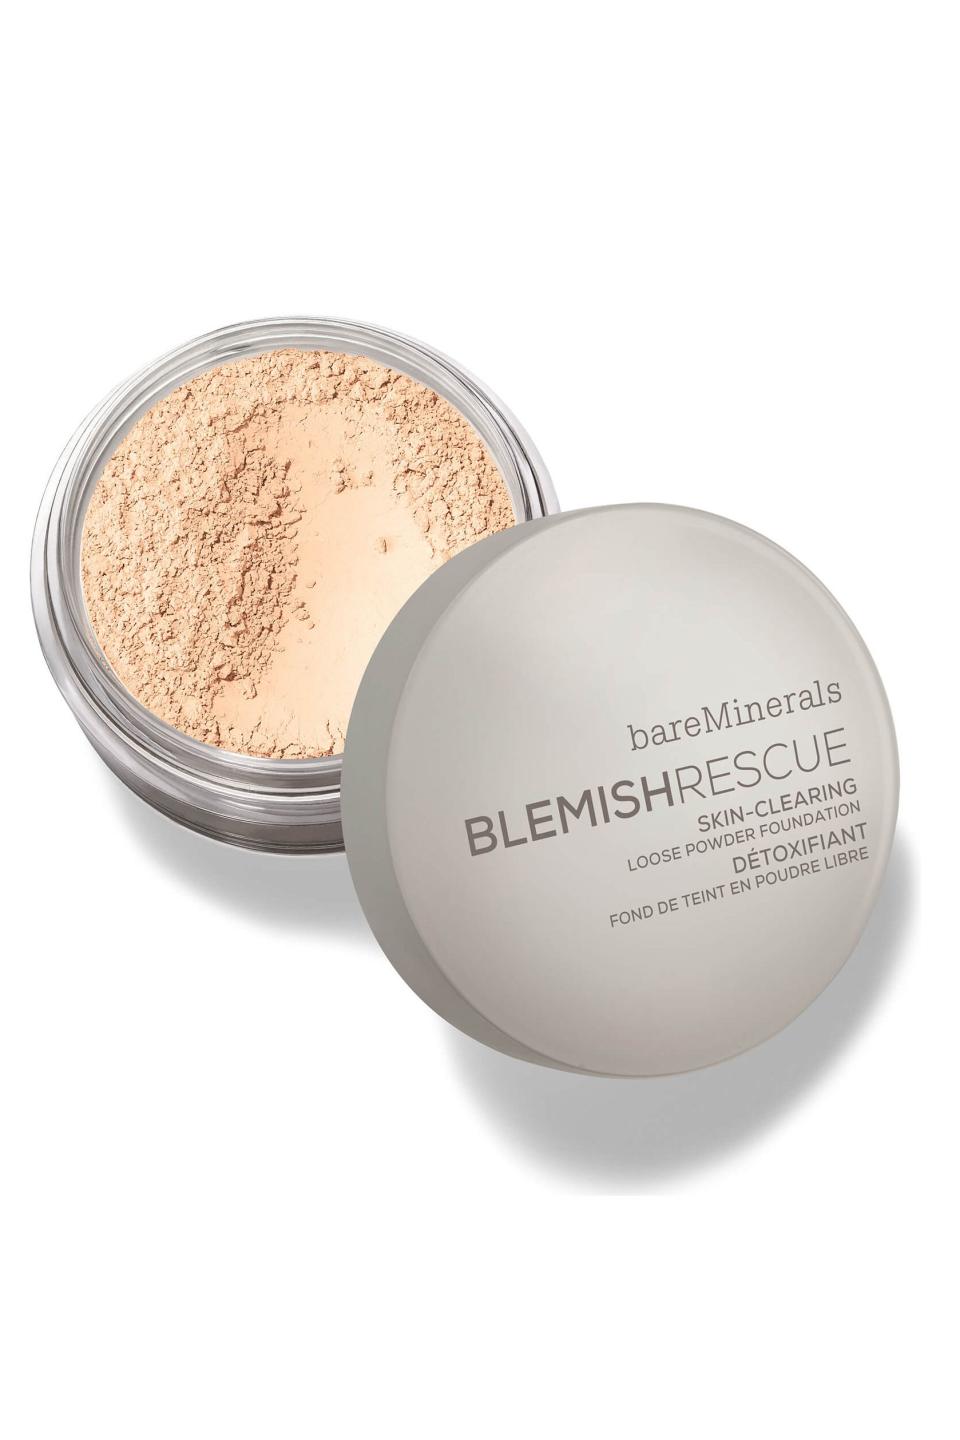 1) BareMinerals Blemish Rescue Skin-Clearing Powder Foundation